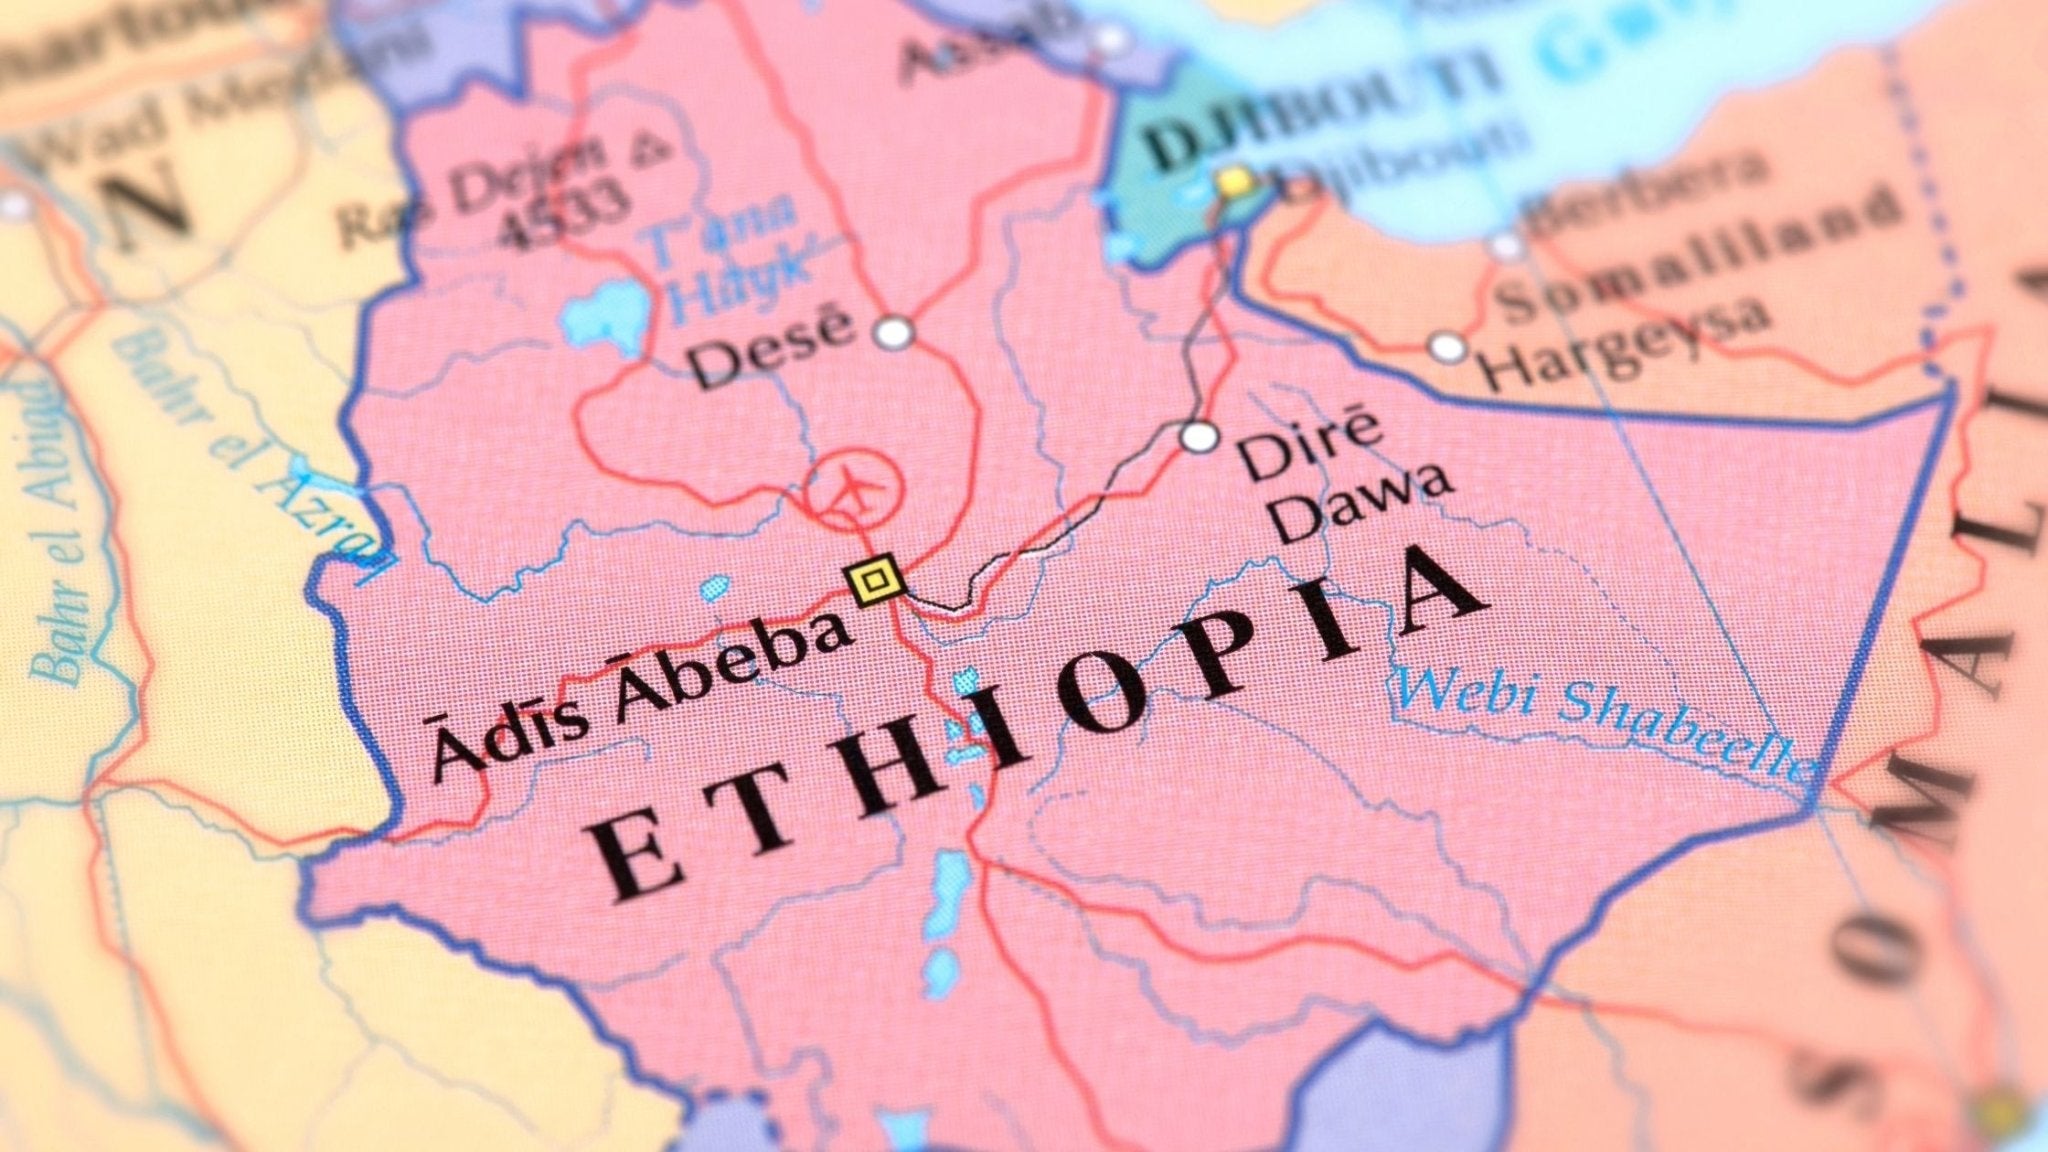 Ethiopia - The Advancement of Freedom, Unity, and Black Pride